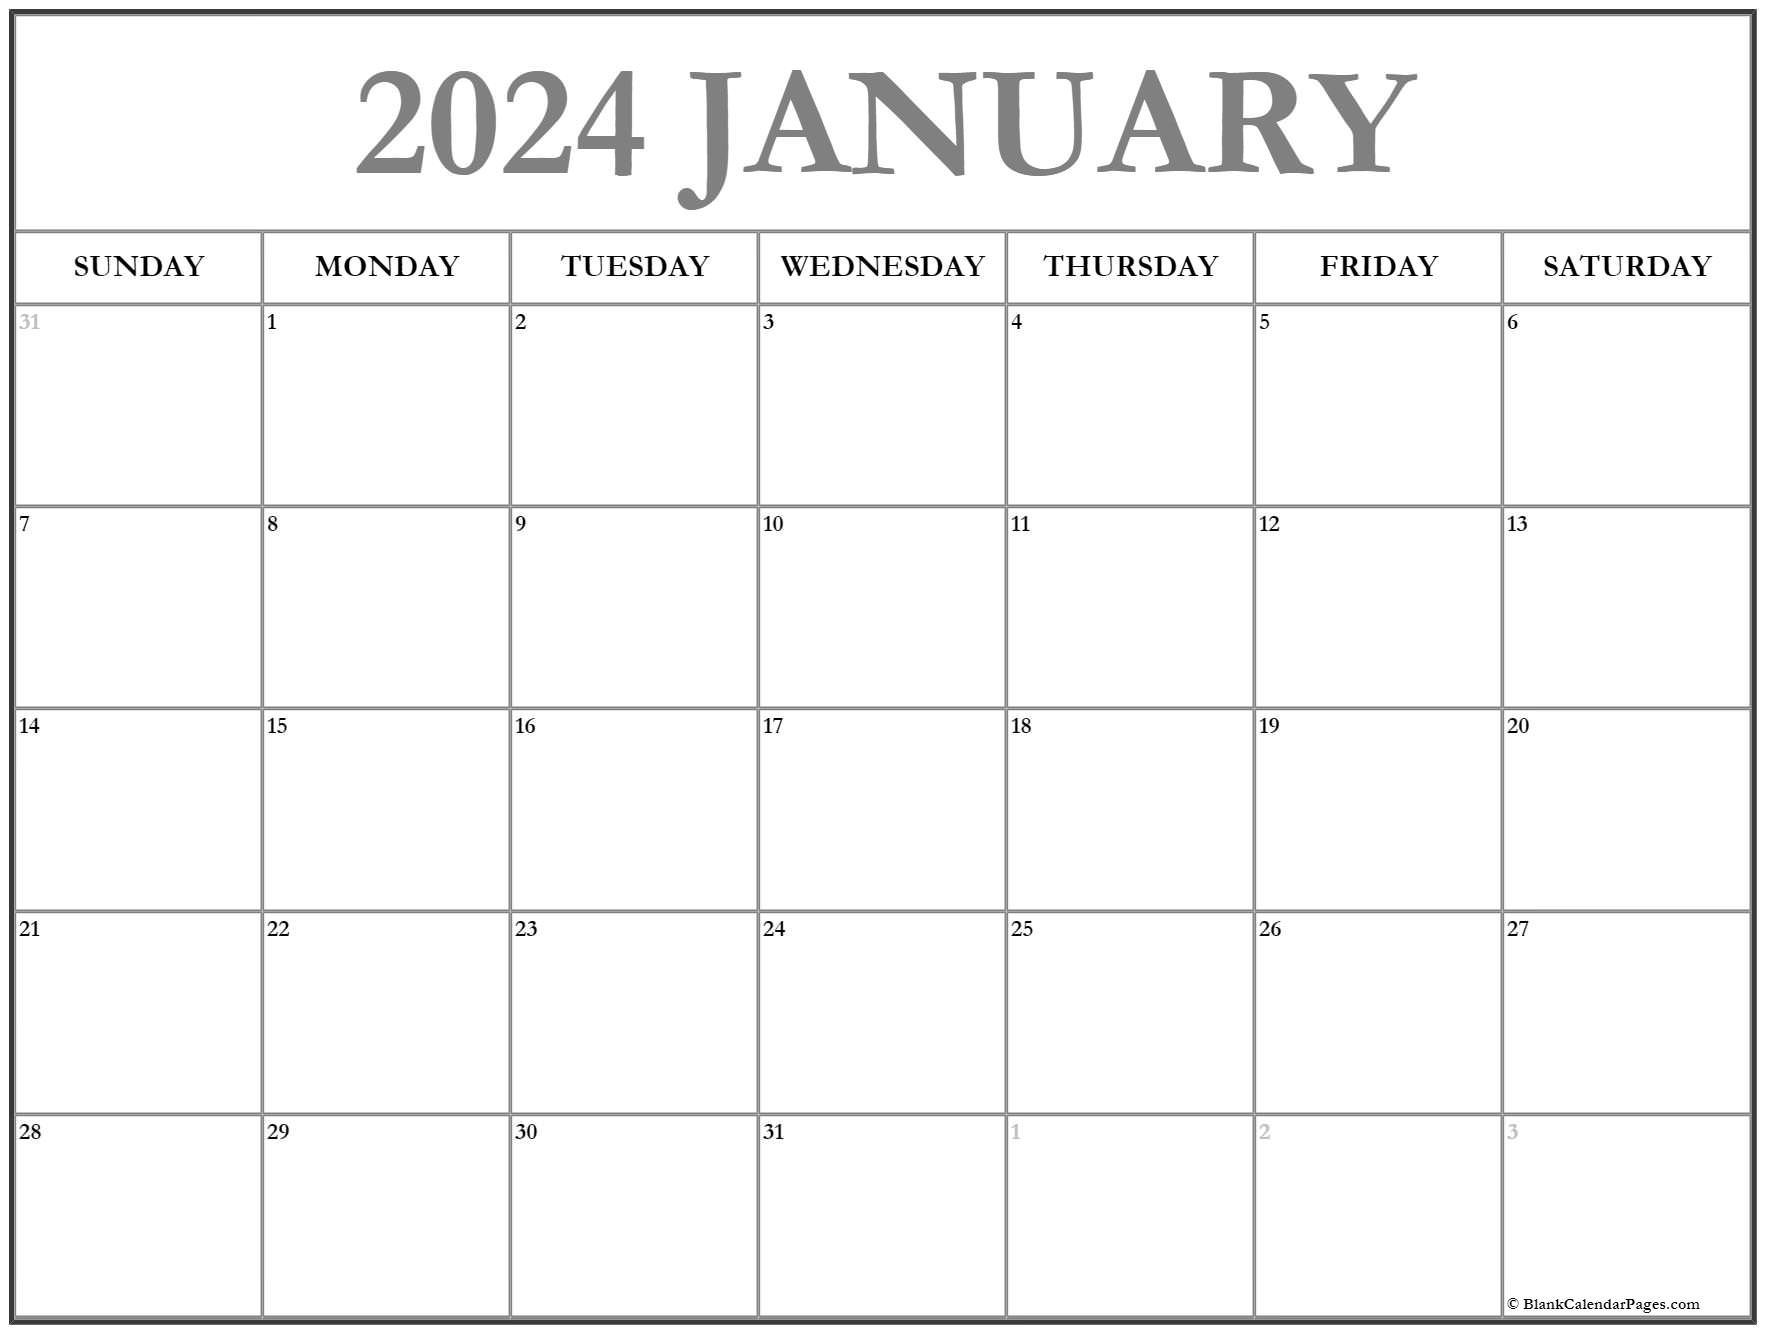 January 2020 calendar 56+ templates of 2020 printable